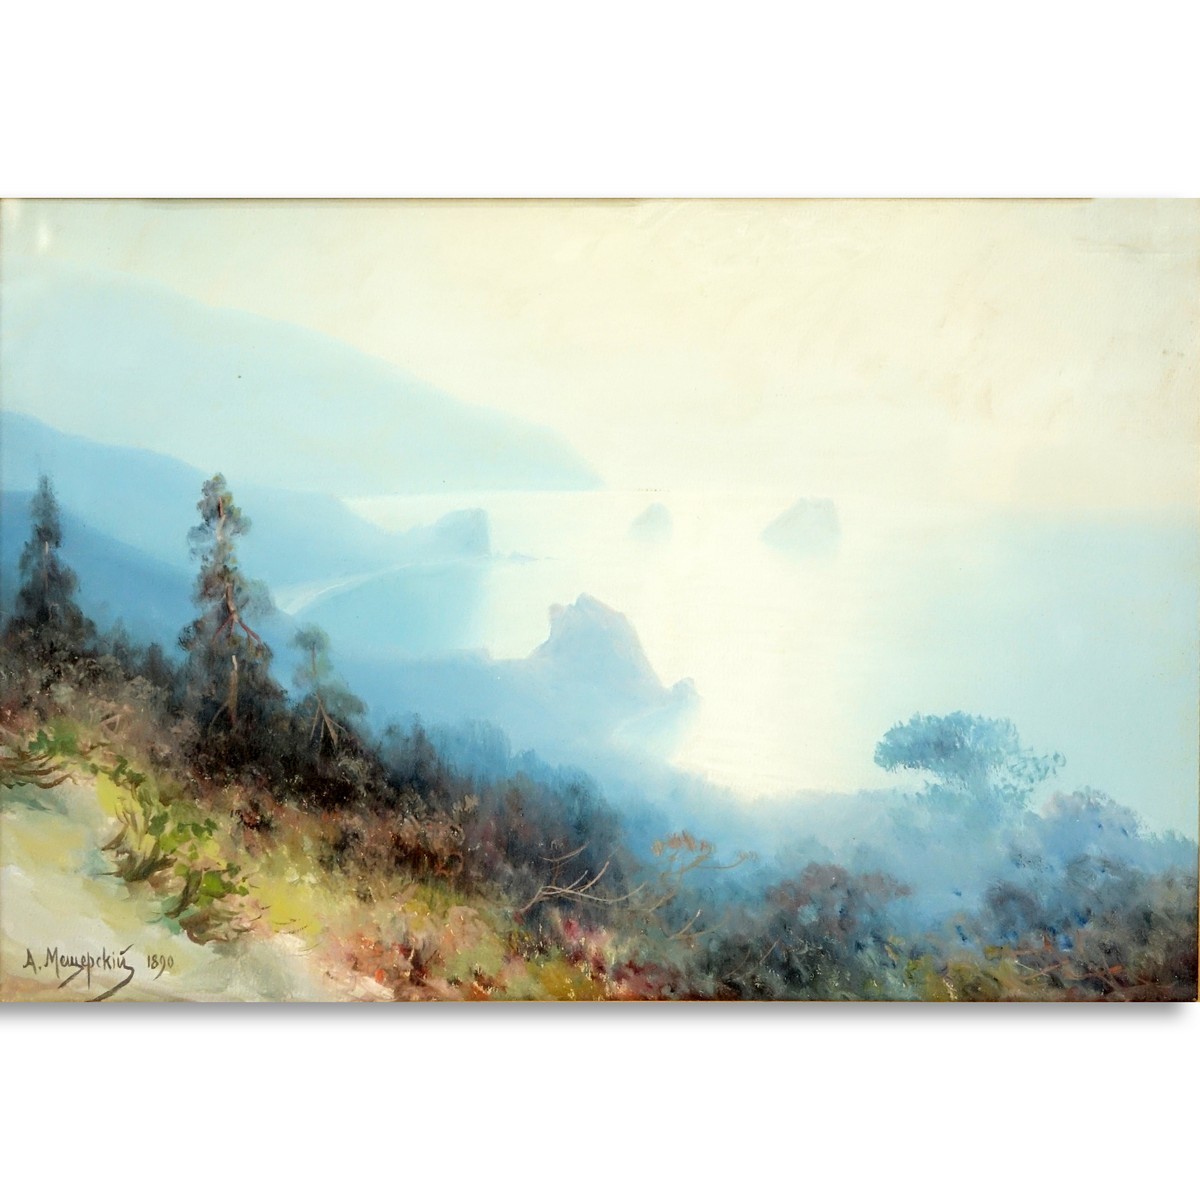 Arsenii Ivanovich Meschersky, Russian (1834 - 1902) Watercolor on paper "Mountain Shoreline" Signed